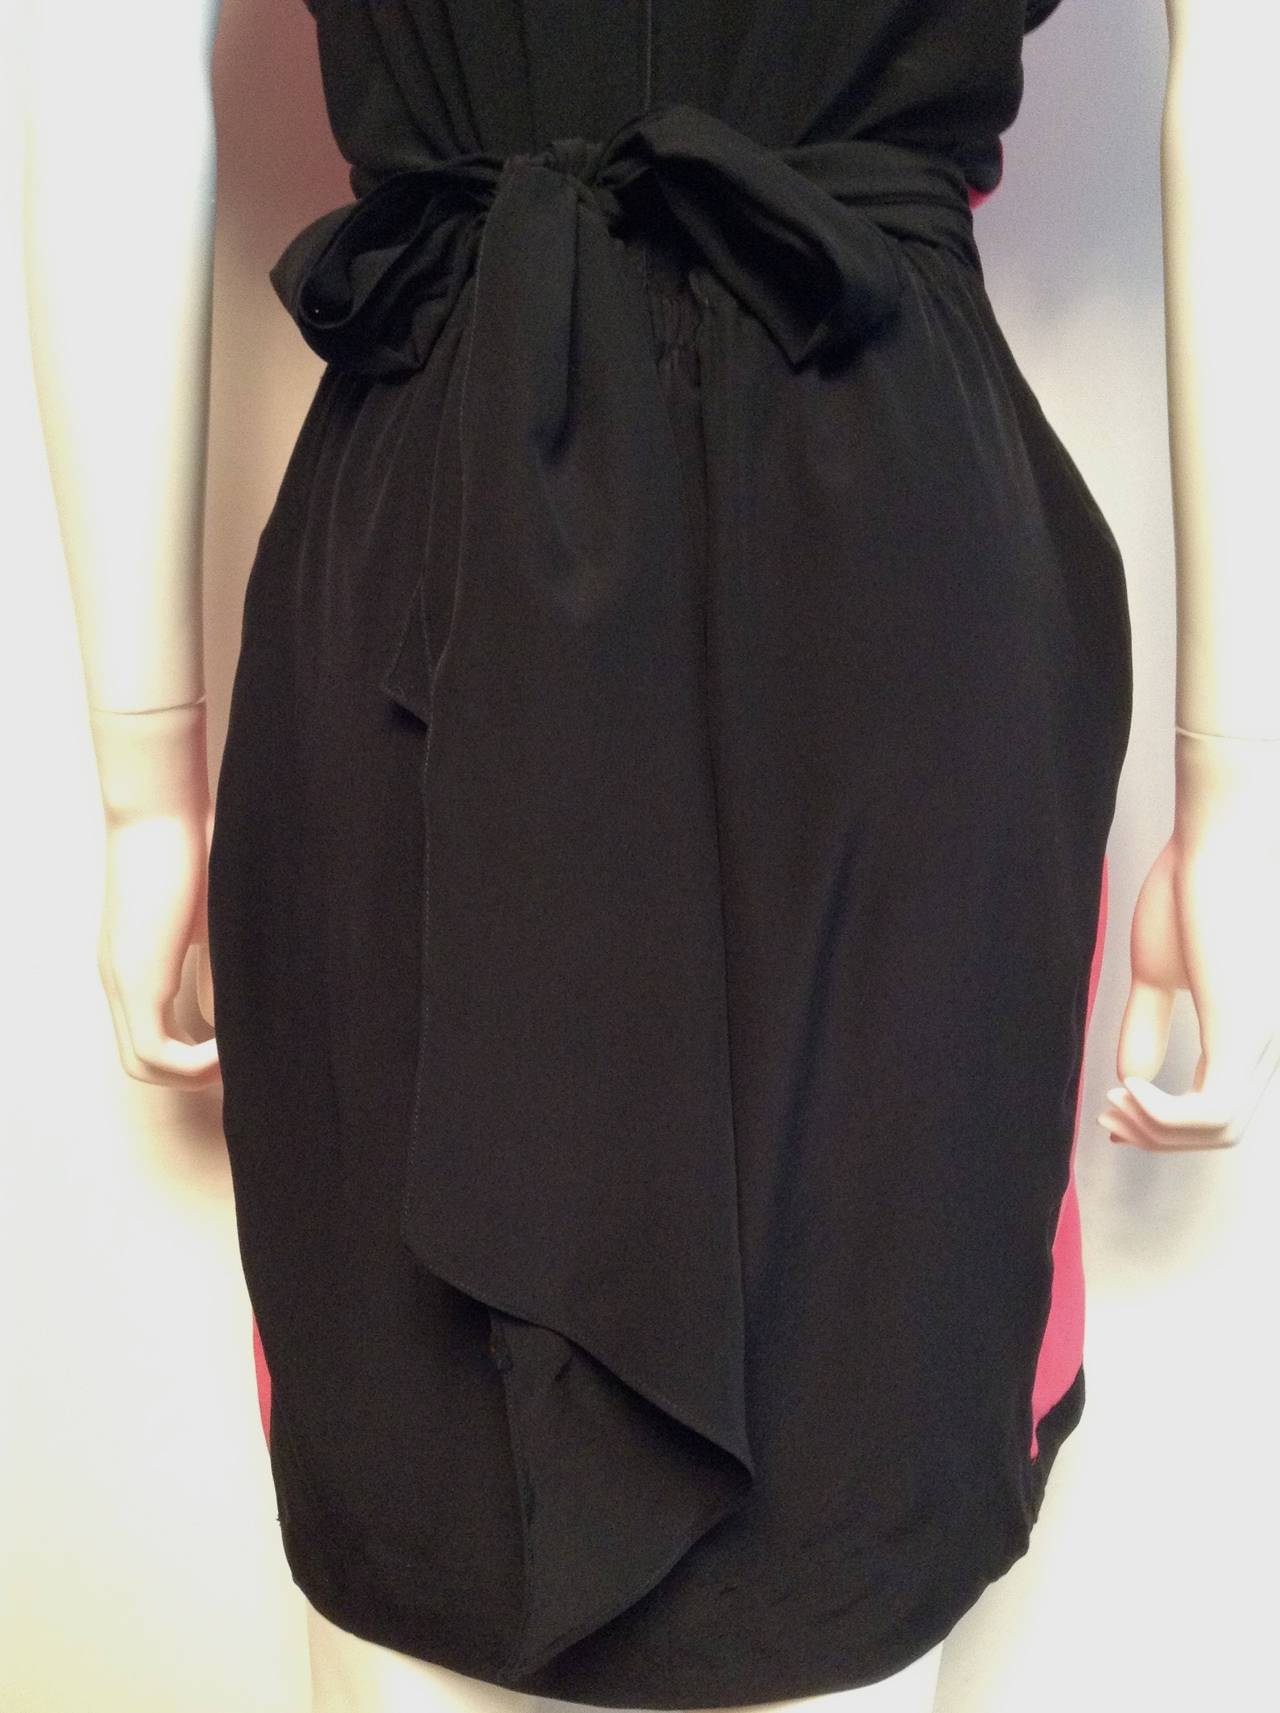 Karl Lagerfeld Black and Pink Vintage Dress Size 8 For Sale 5